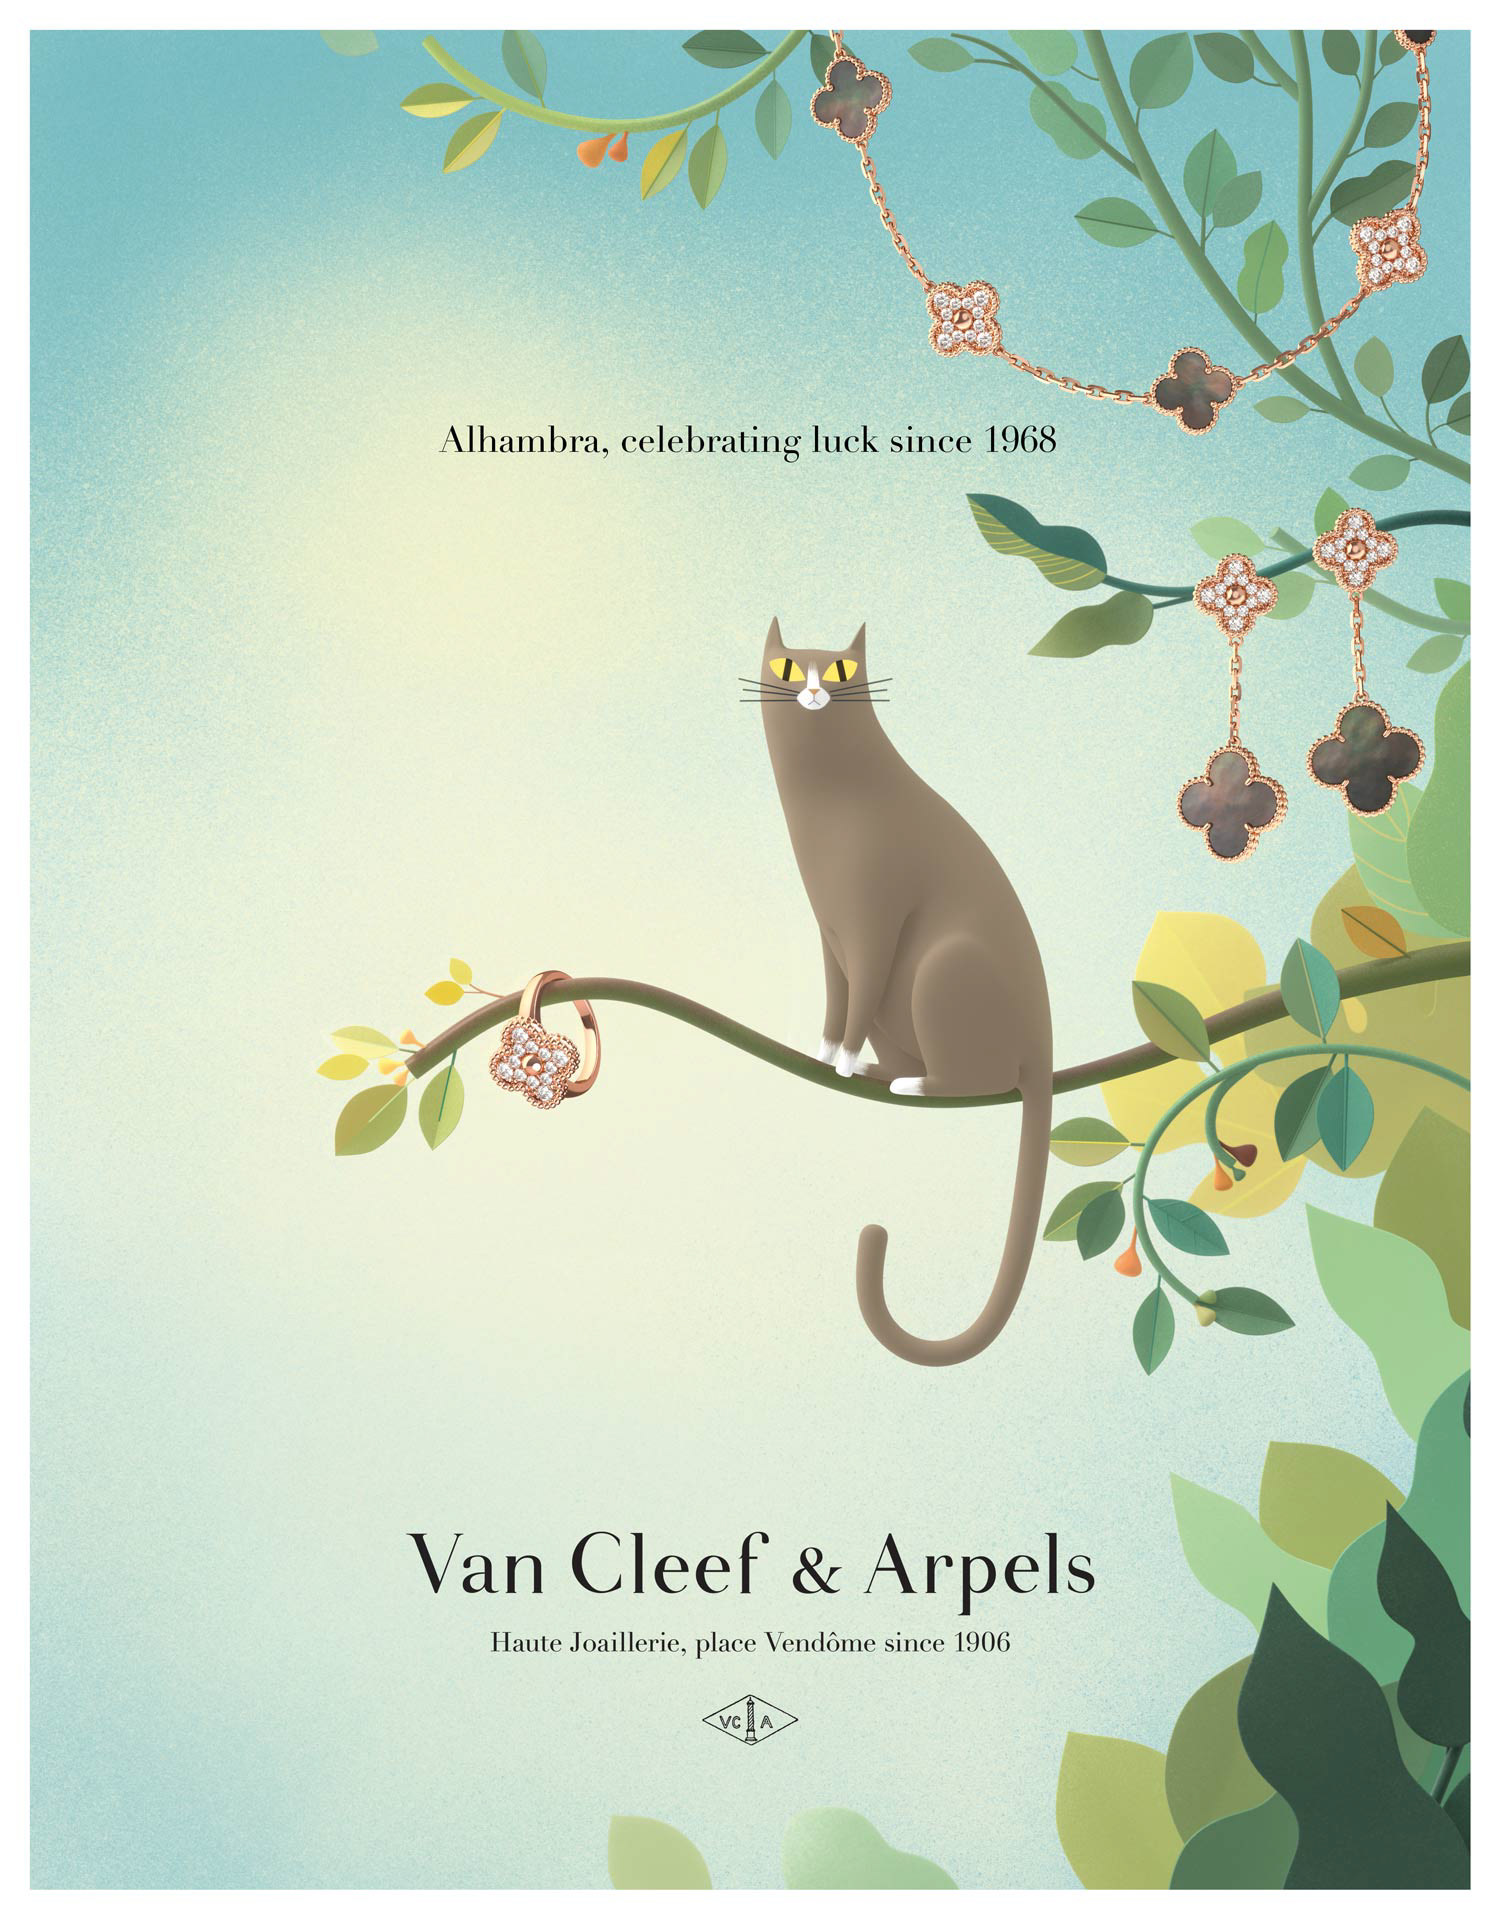 Van Cleef & Arpels - Alhambra - Campaigns and content - Watch & jewelry -  Mazarine Stories